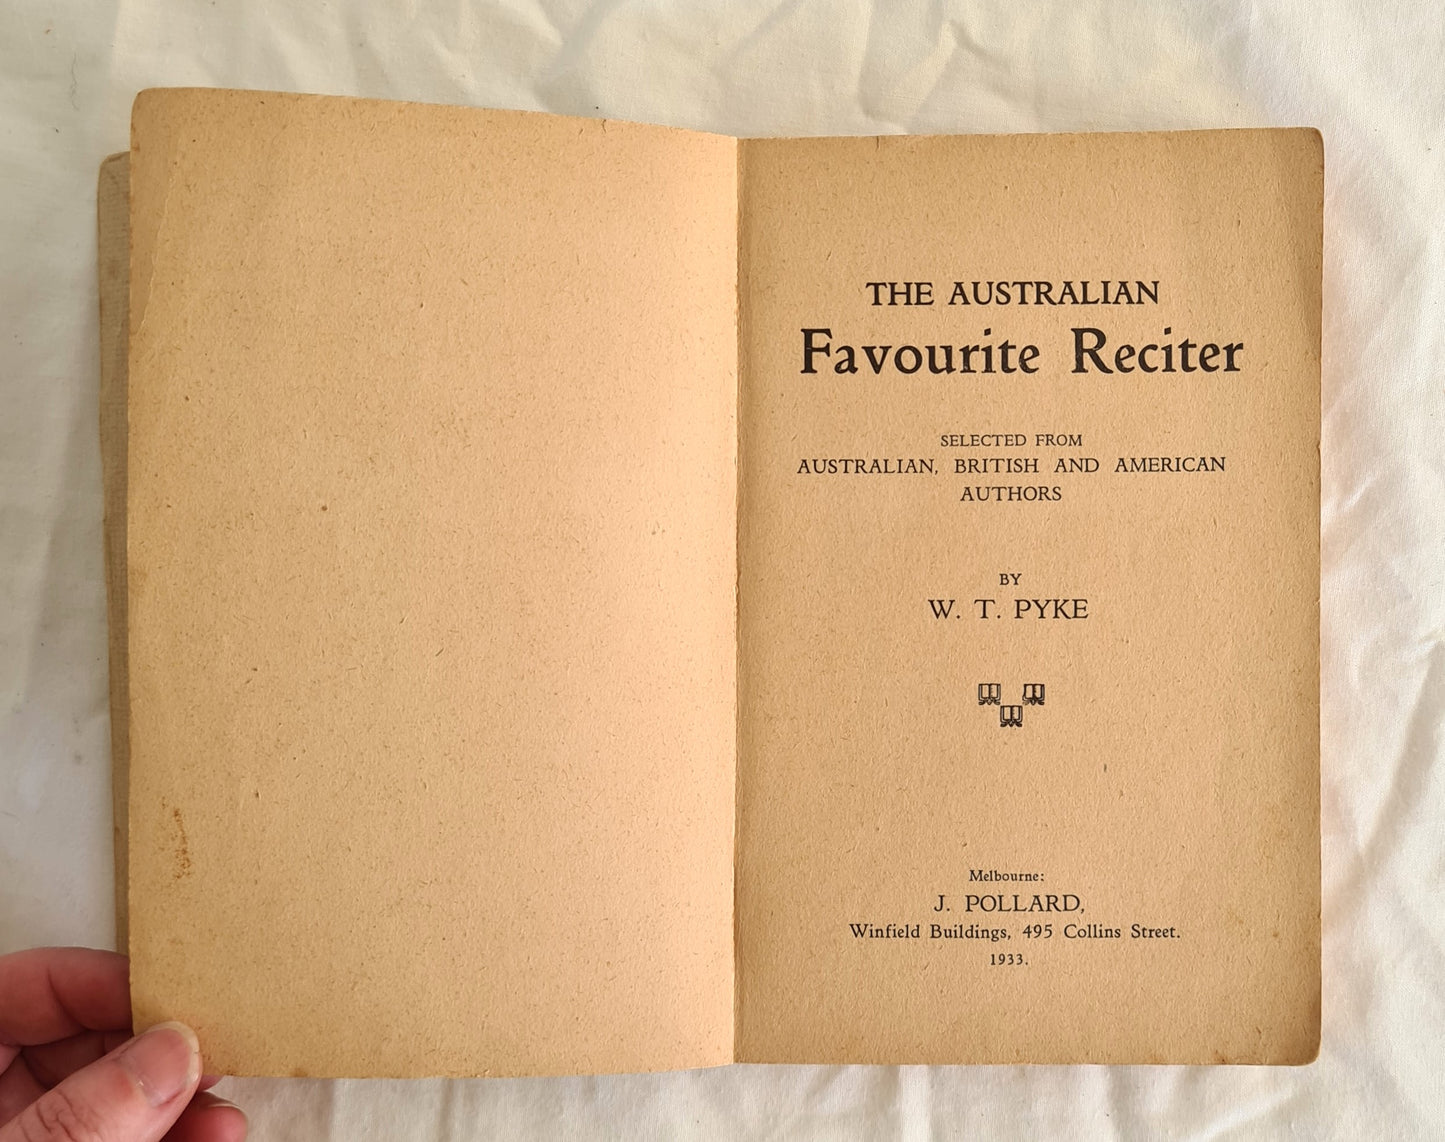 The Australian Favourite Reciter by W. T. Pyke